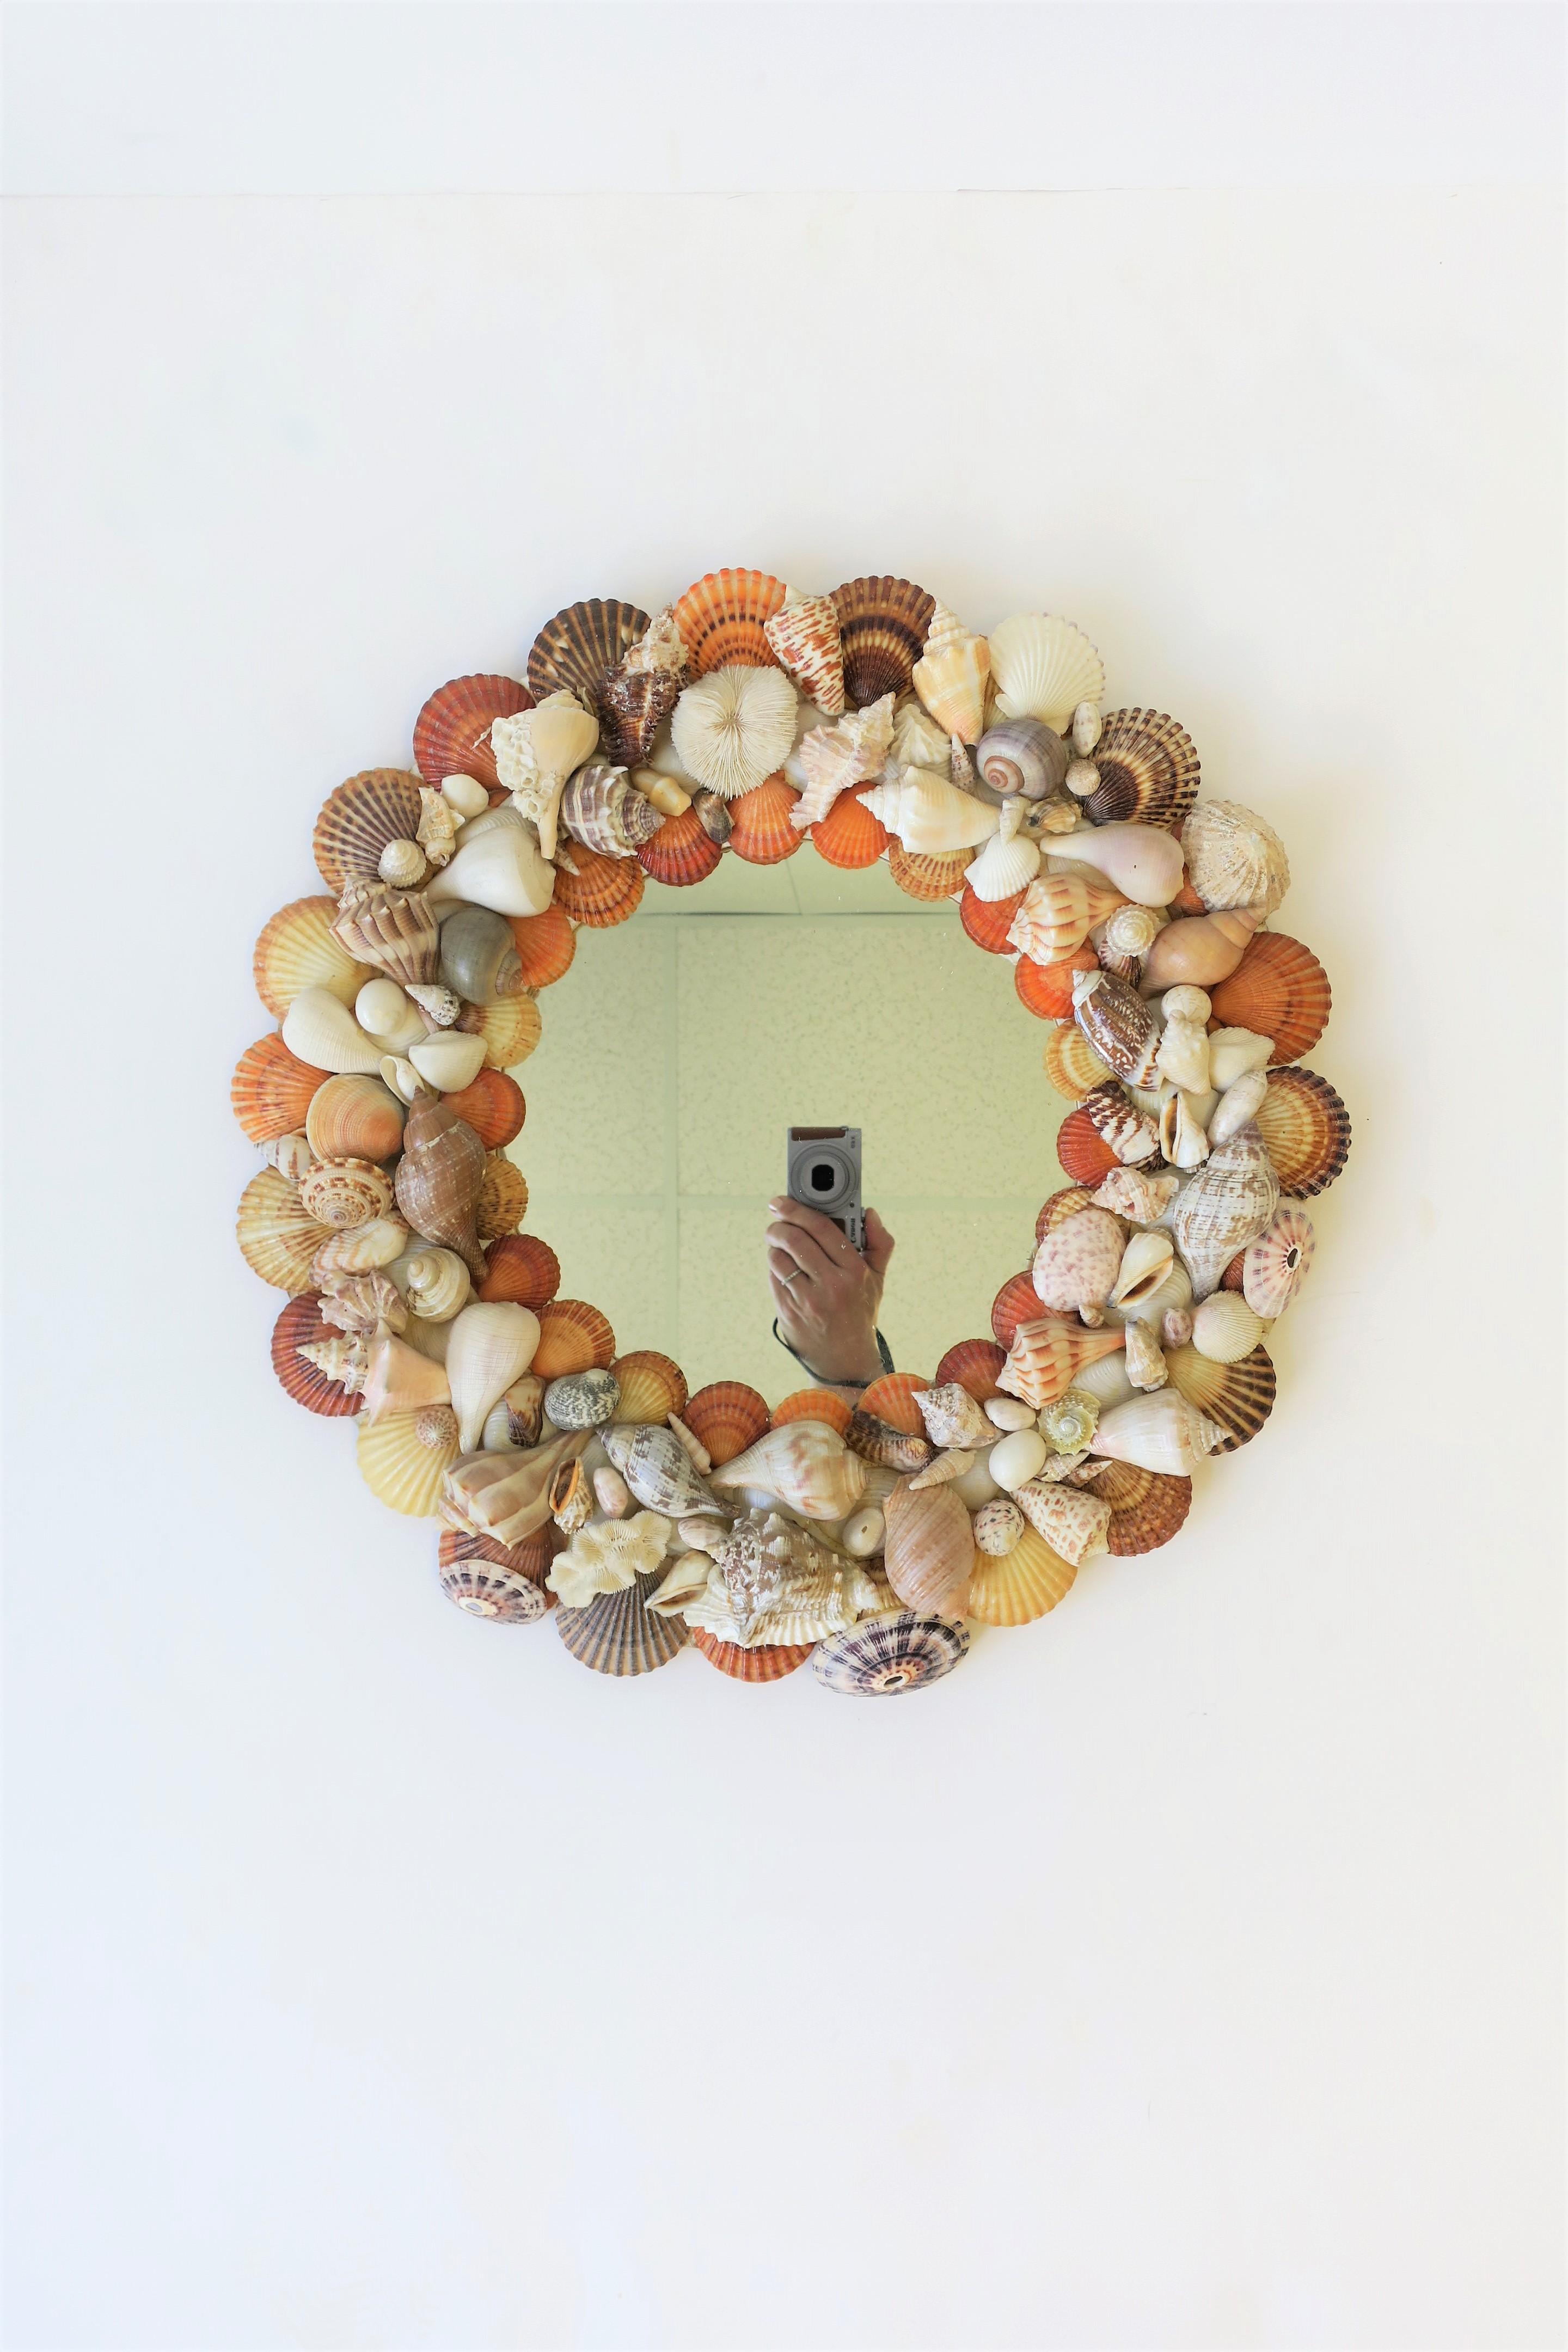 A beautiful vintage seashell/sea shell round wall mirror, circa 1970s. Many beautiful seashells around this mirror. 

Mirror measures: 2